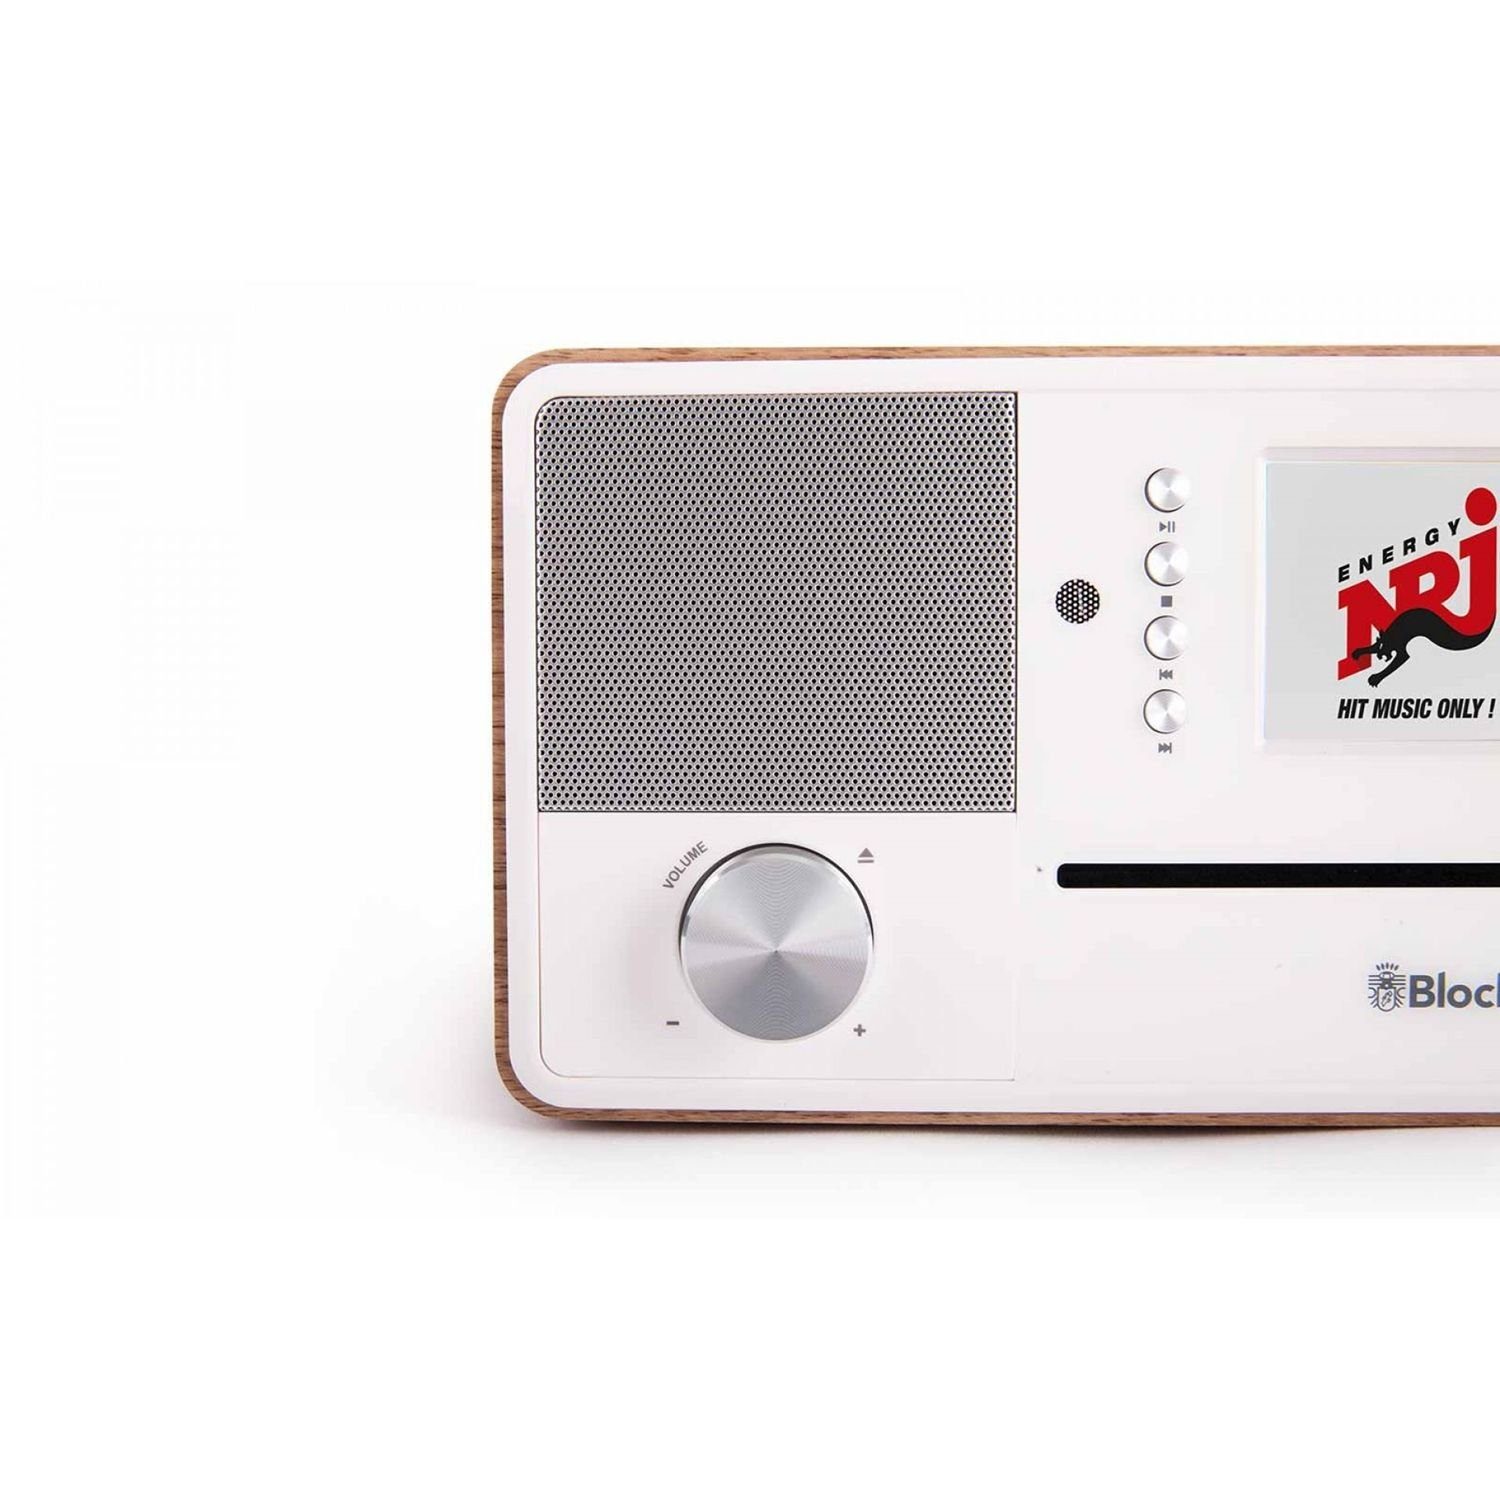 Spotify walnuss/silber Digitalradio SR-50 CD (DAB) USB UKW/DAB+/Internetradio Smartradio Bluetooth Block